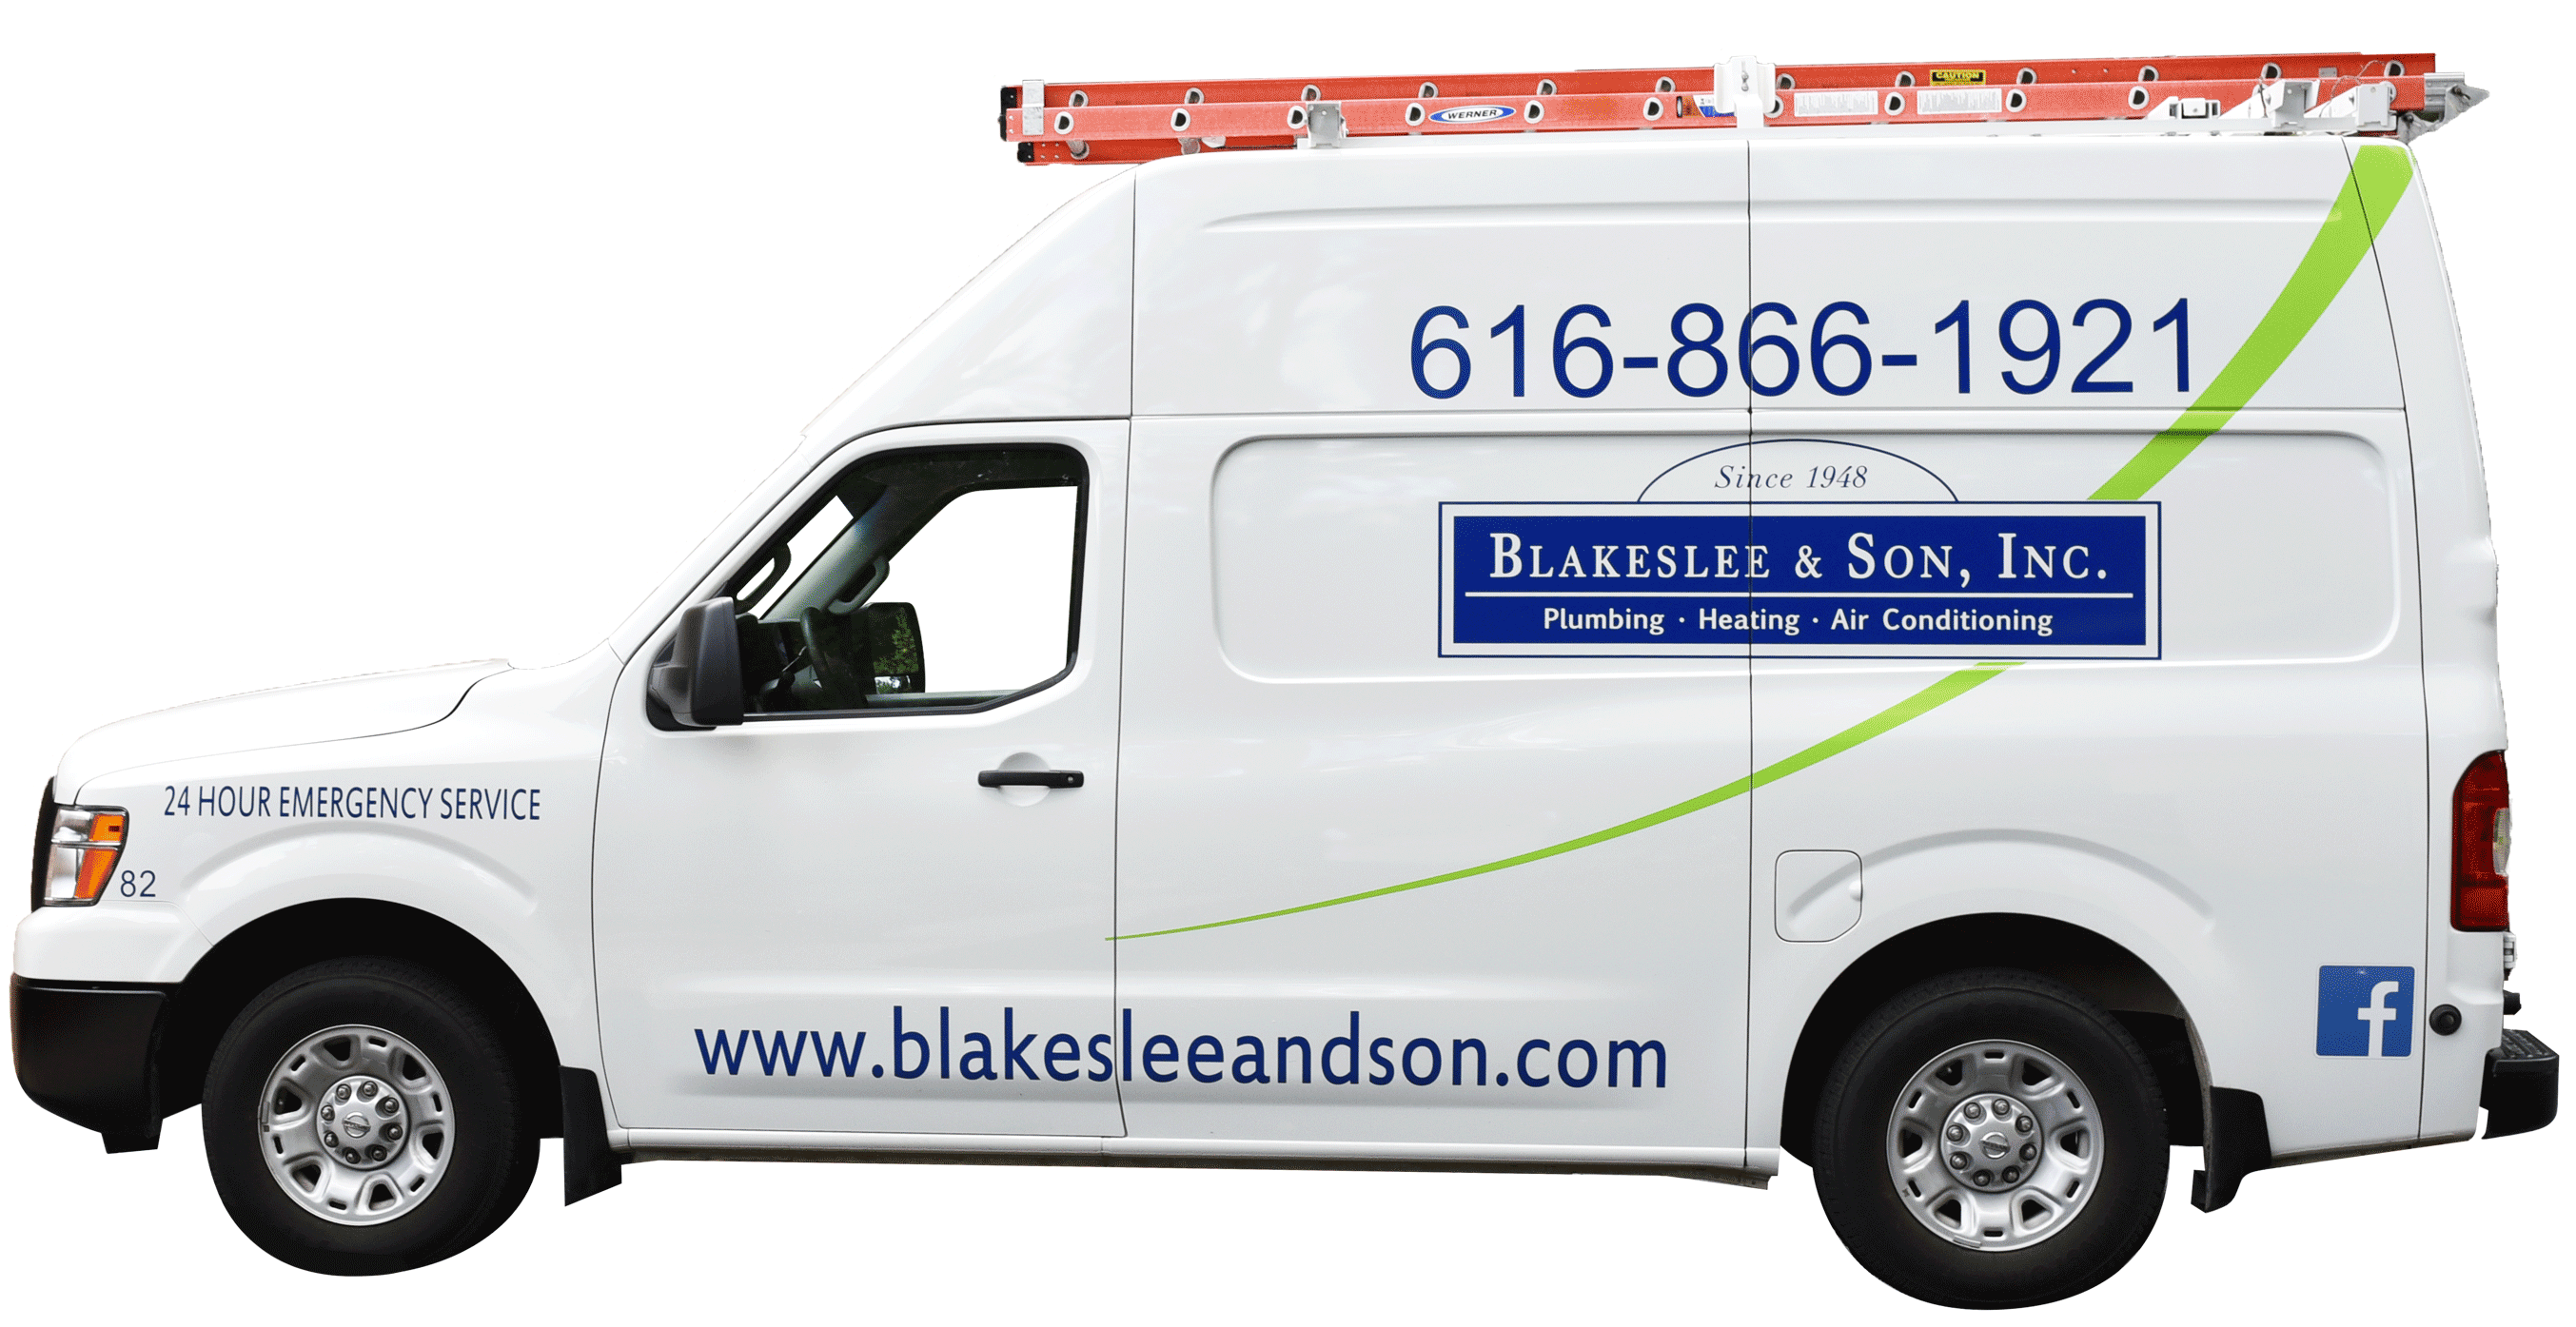 Blakeslee HVAC and plumbing service truck